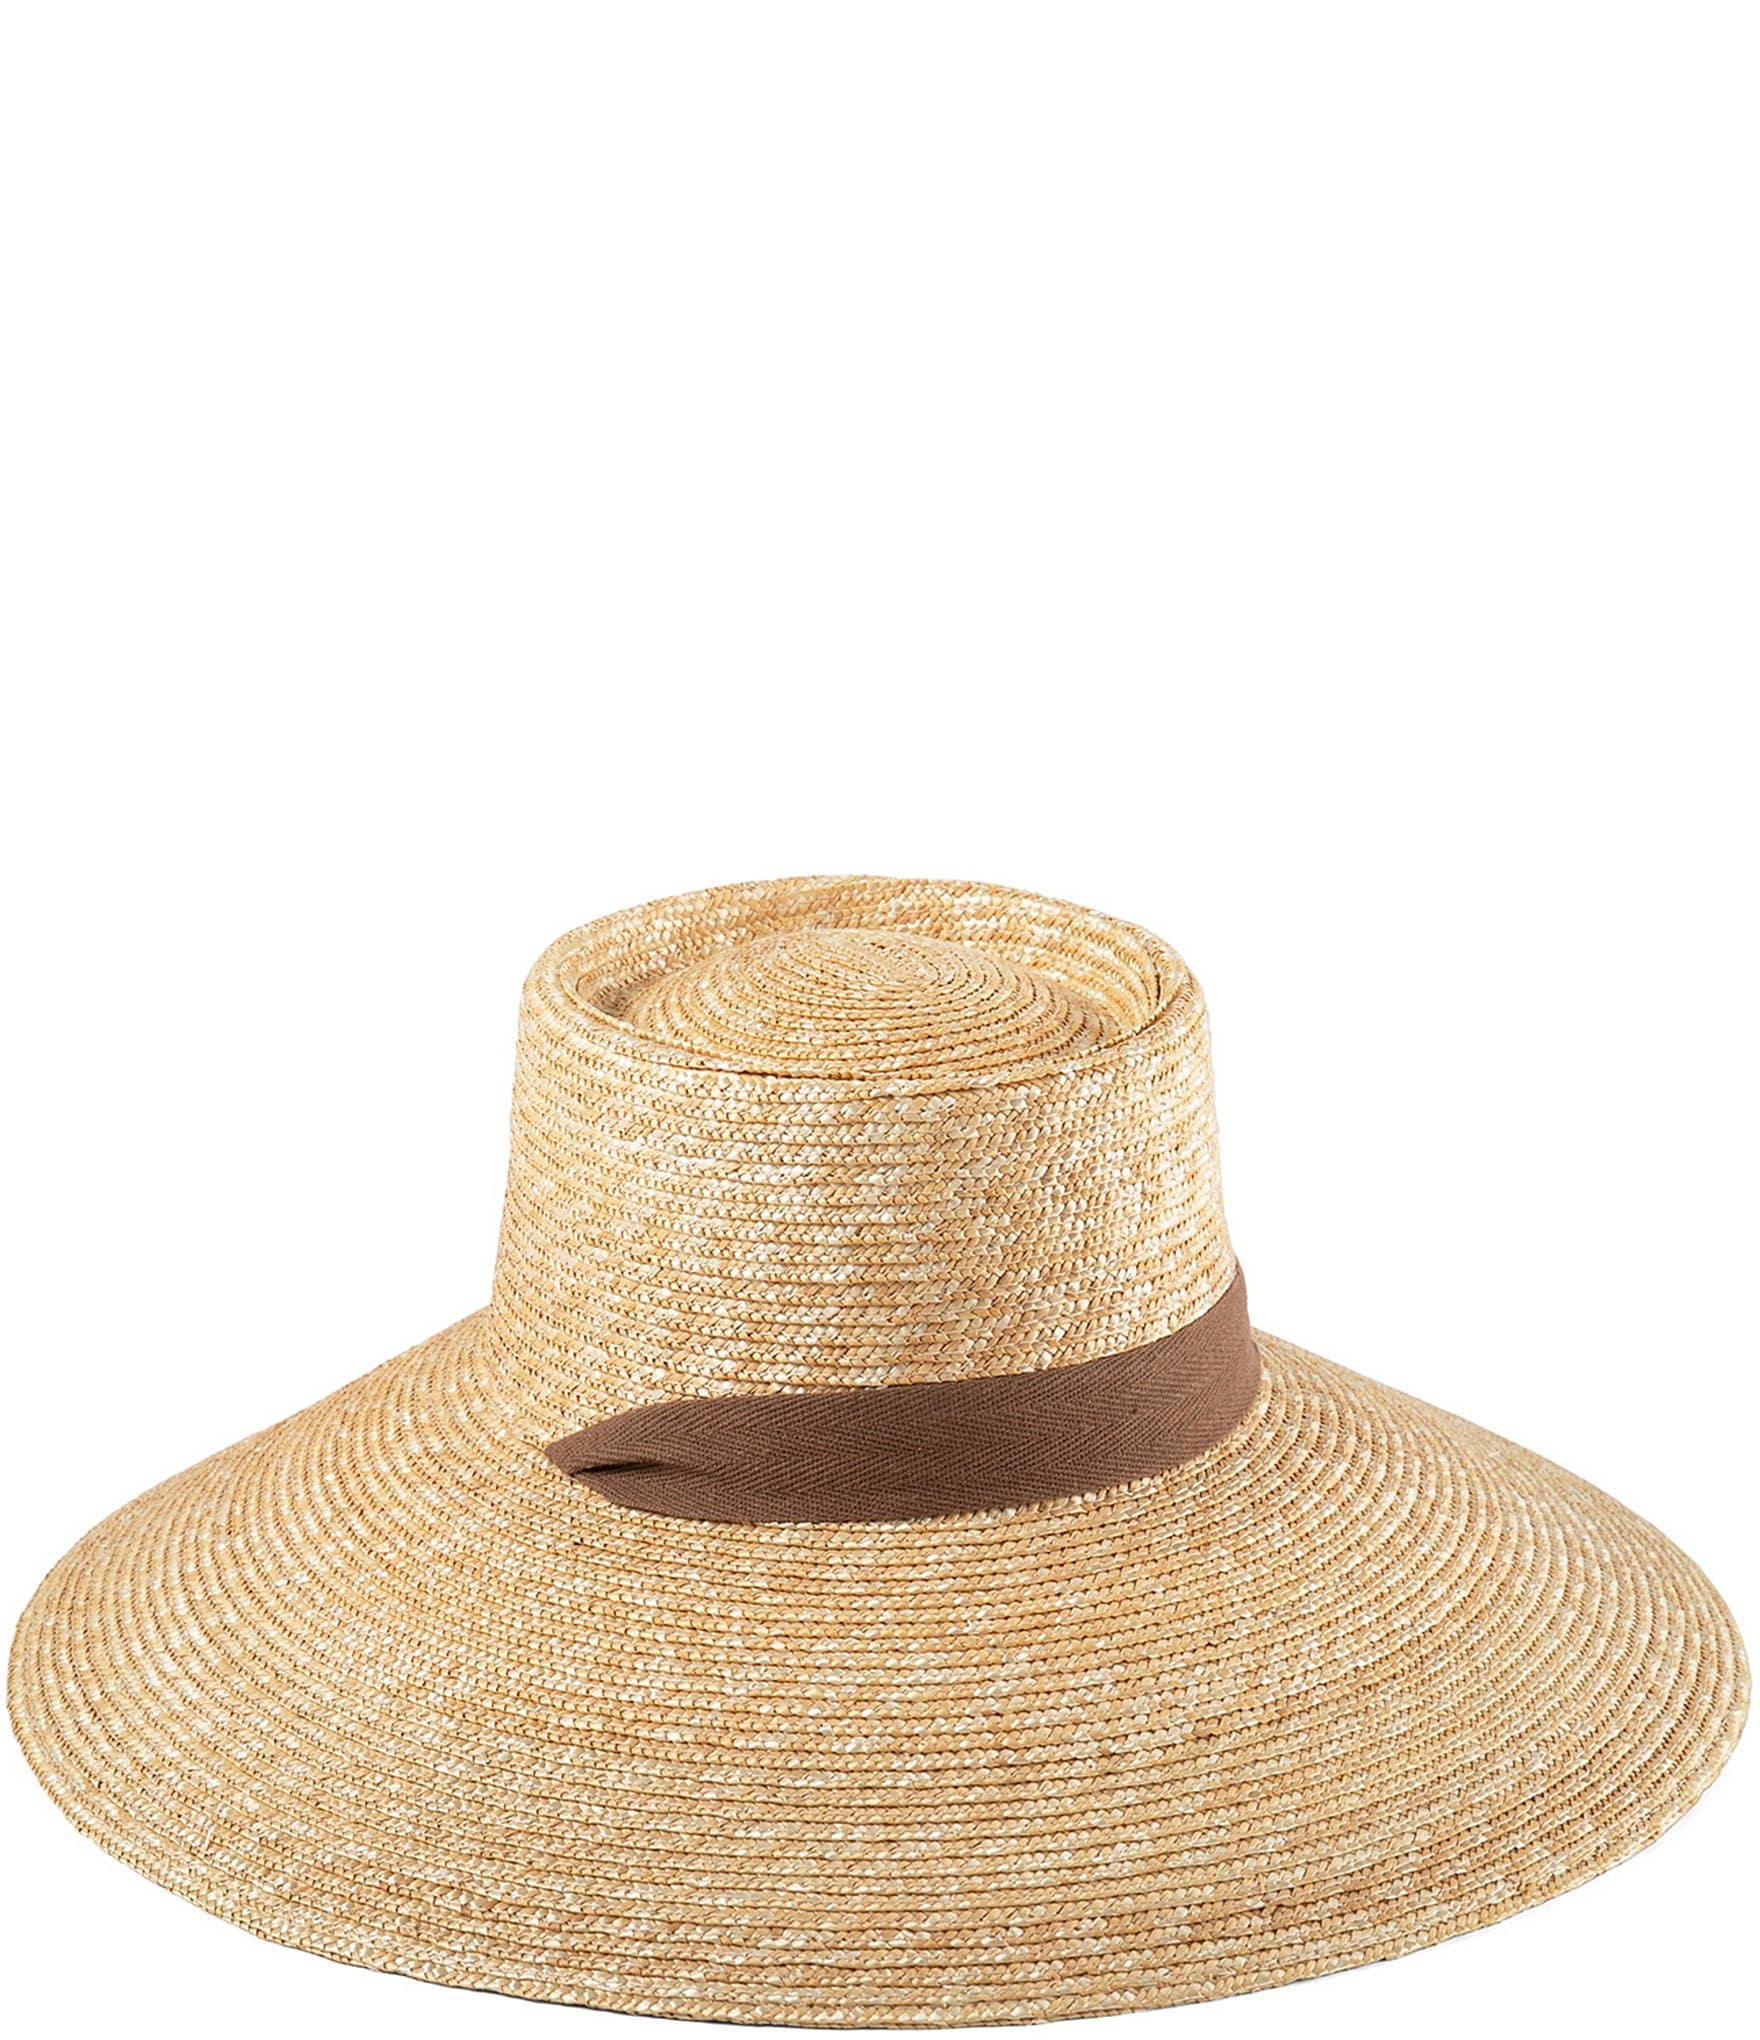 Joywant Rita Straw Sun Hat for Women with UV Wide Brim Wind